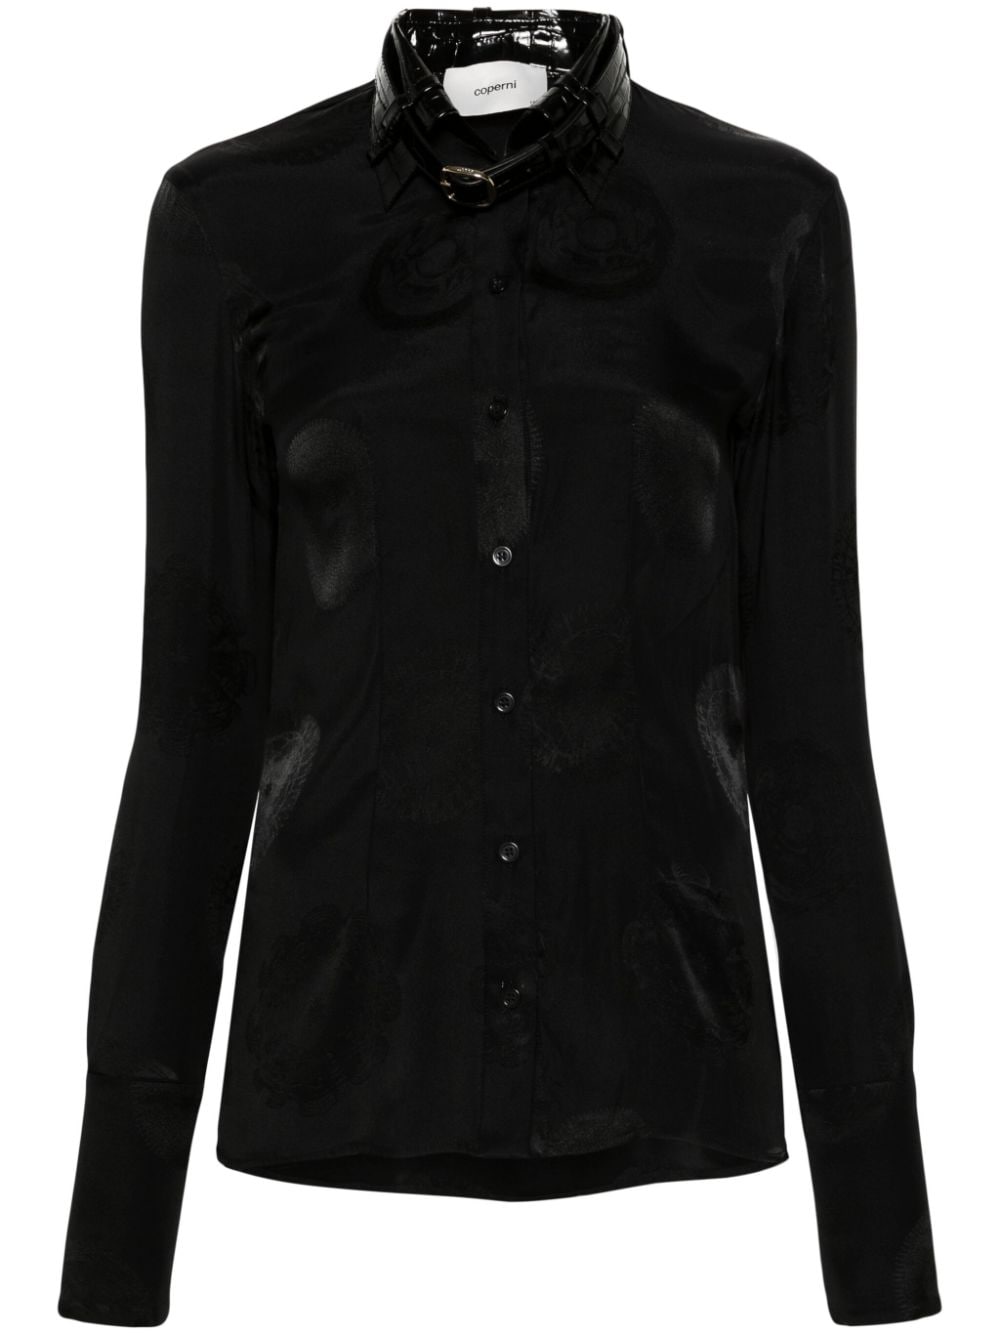 Coperni belted-collar shirt - Black